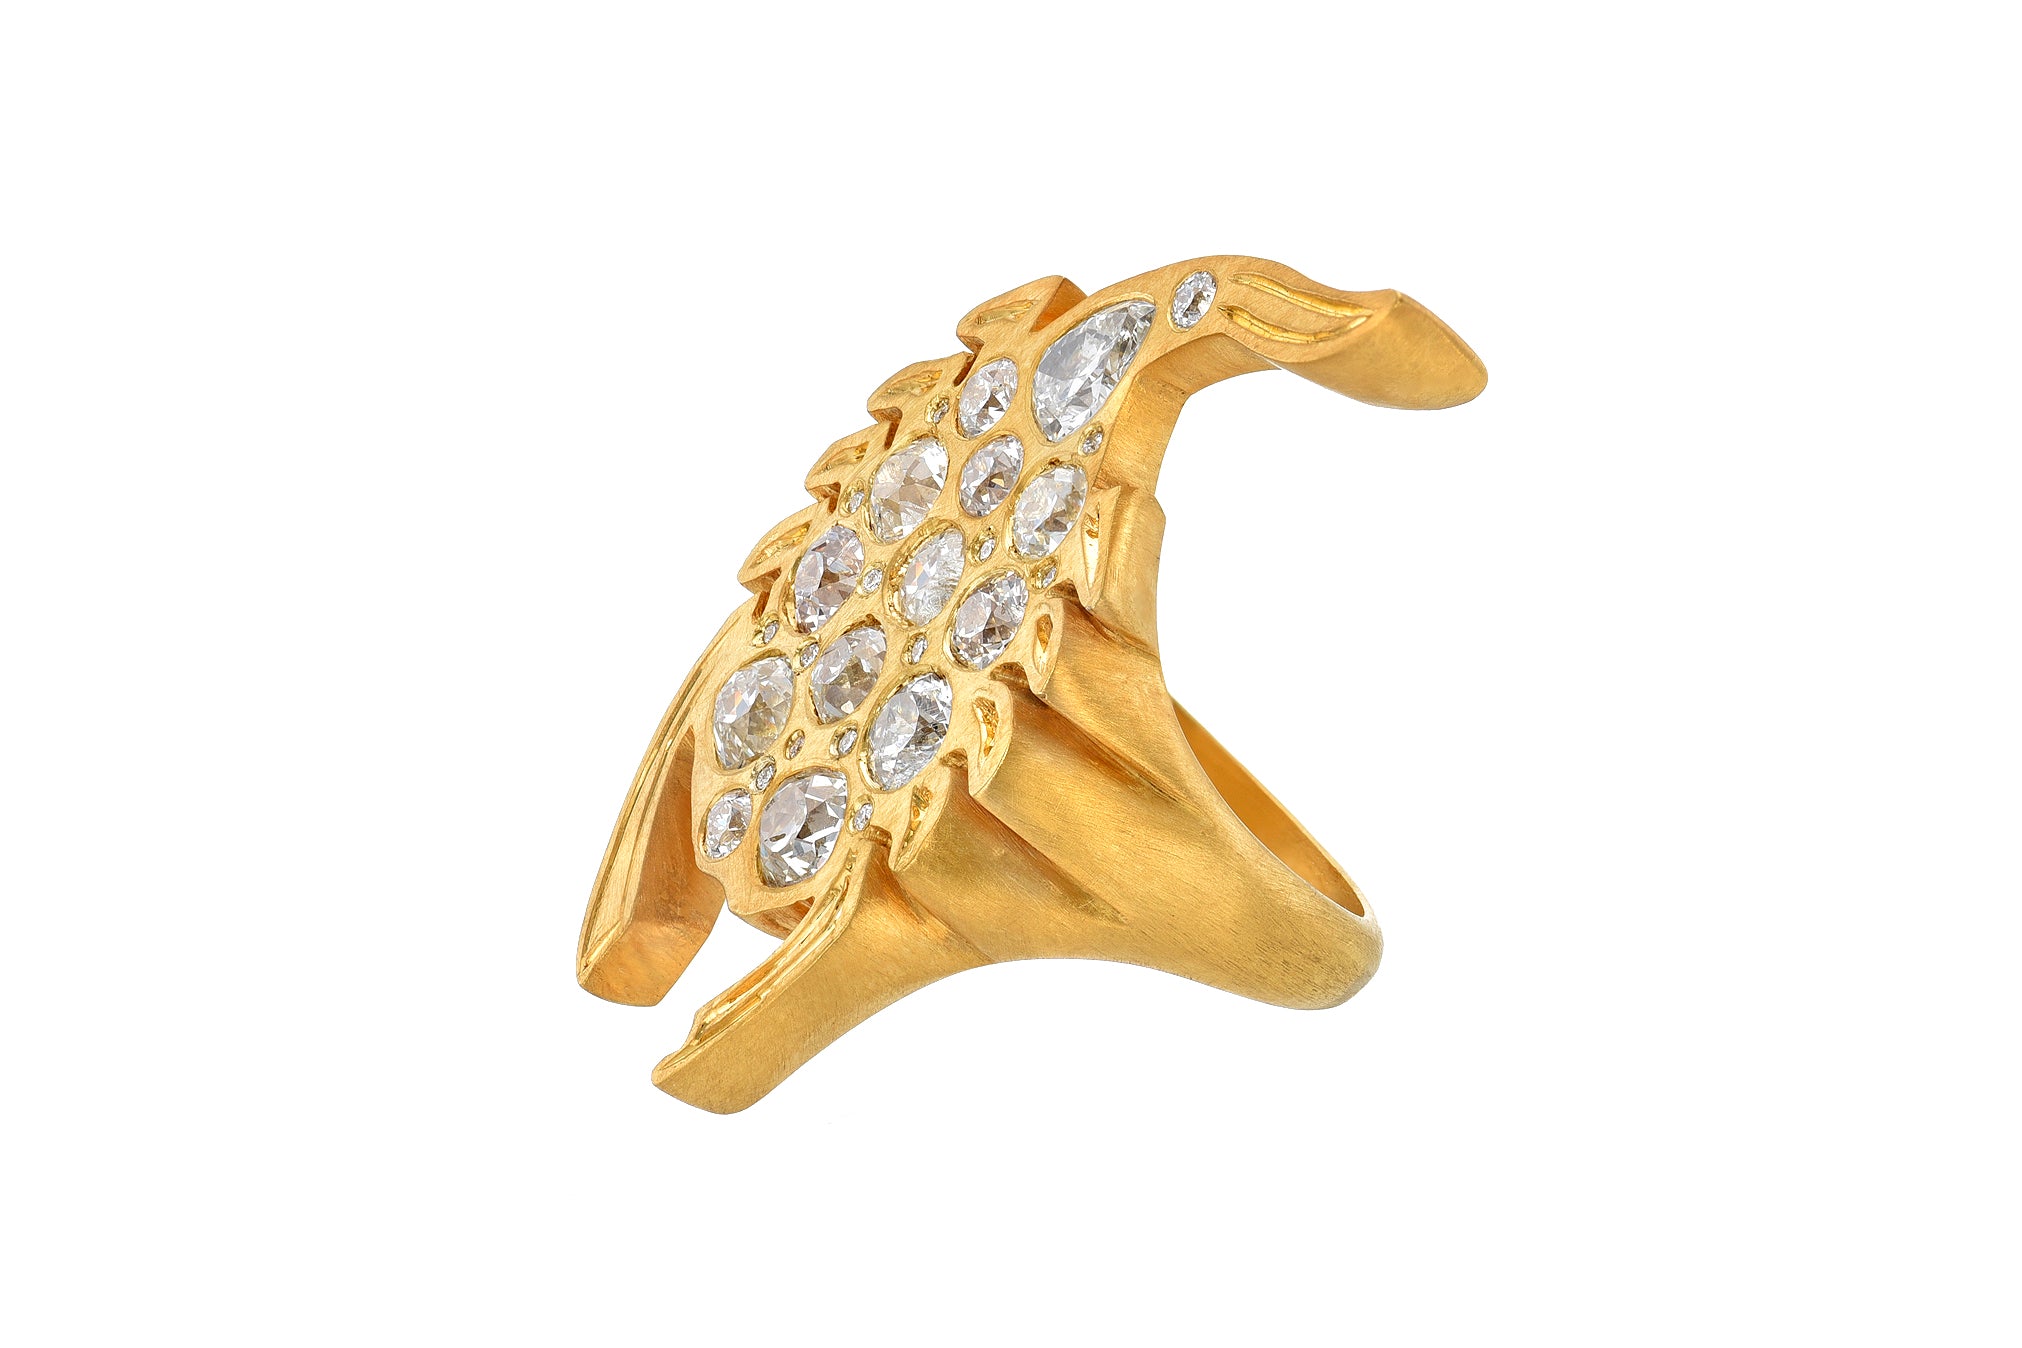 DARIUS JEWELS DENDERA DIAMOND SCORPION RING ZODIAC SCORPIO ANTIQUE OLD MINE CUT DIAMONDS 18K YELLOW GOLD DARYA KHONSARY